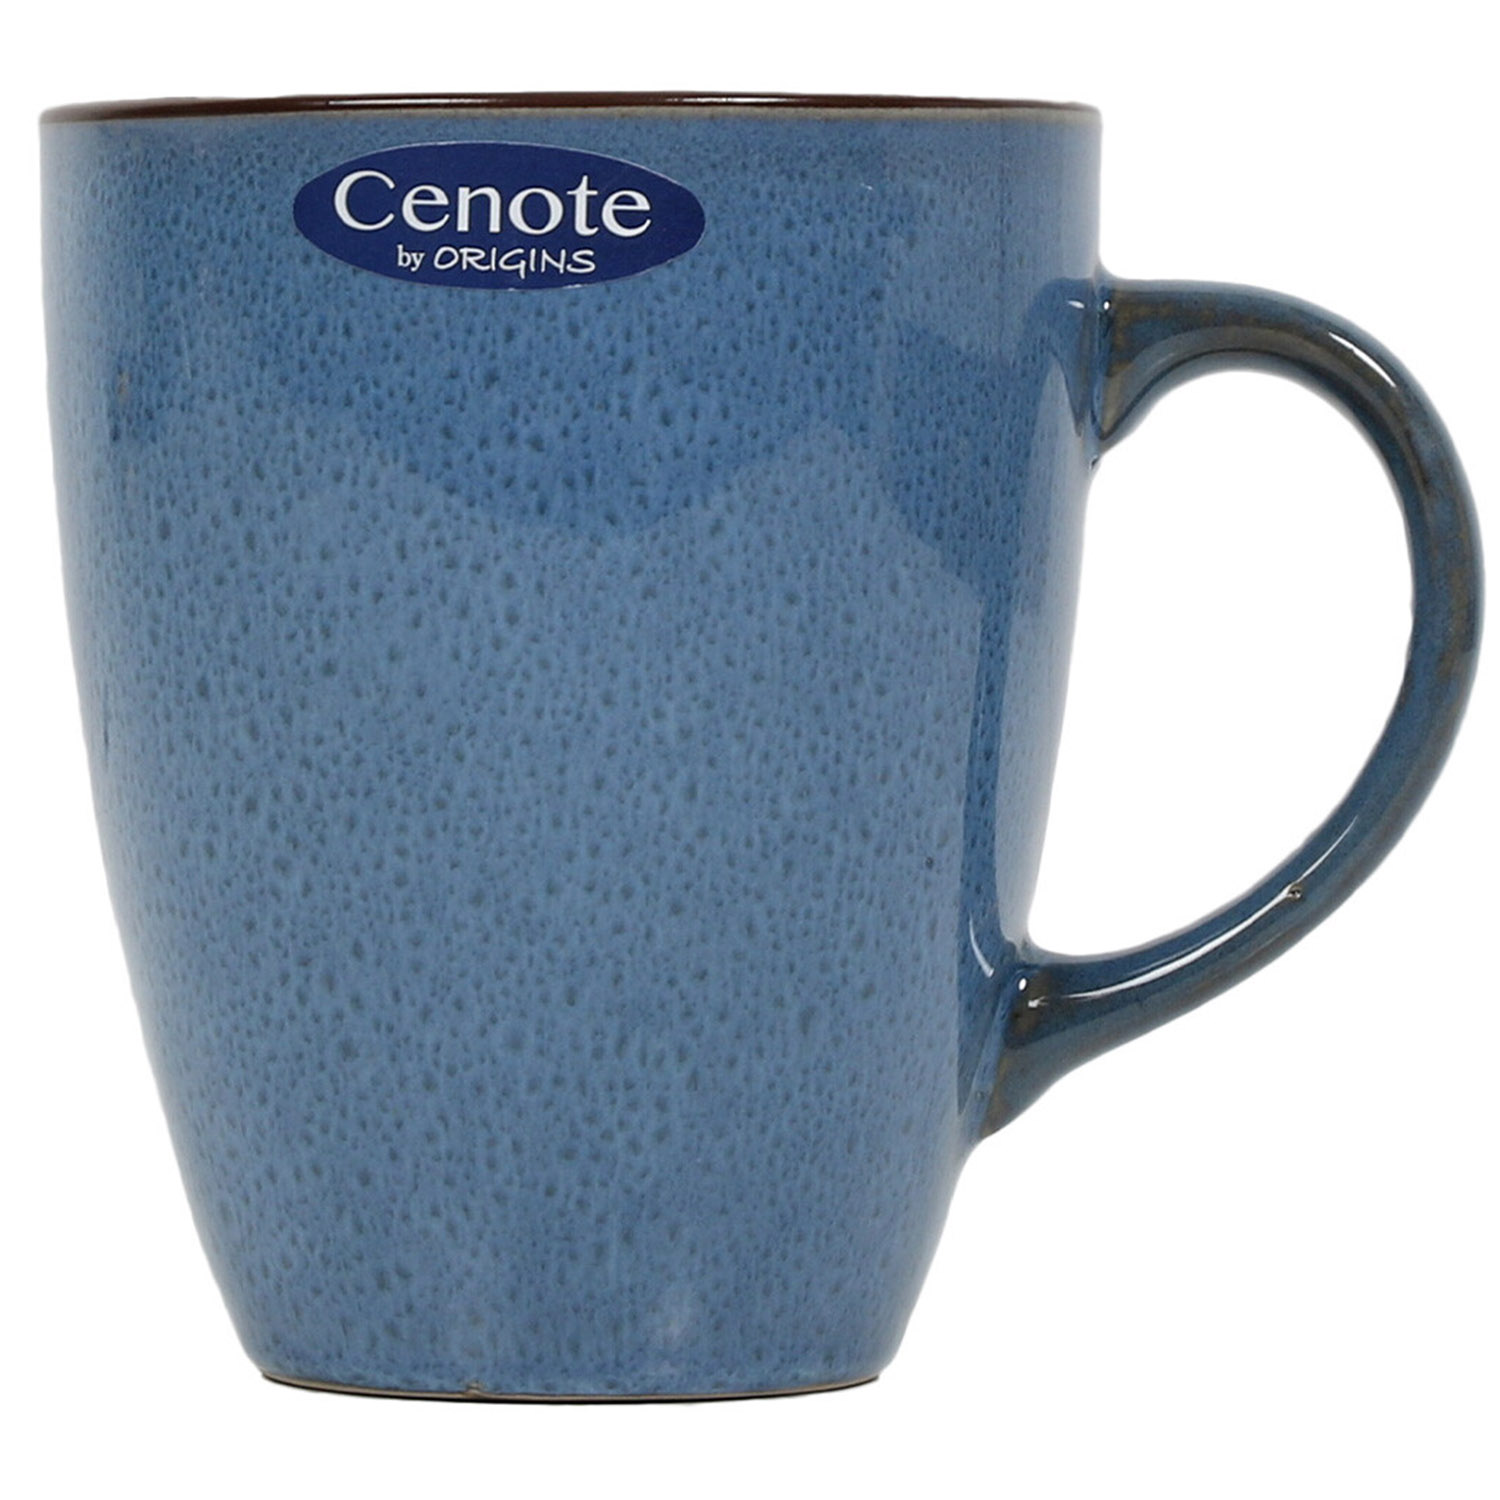 Origins Cenote Blue Stoneware Mug Image